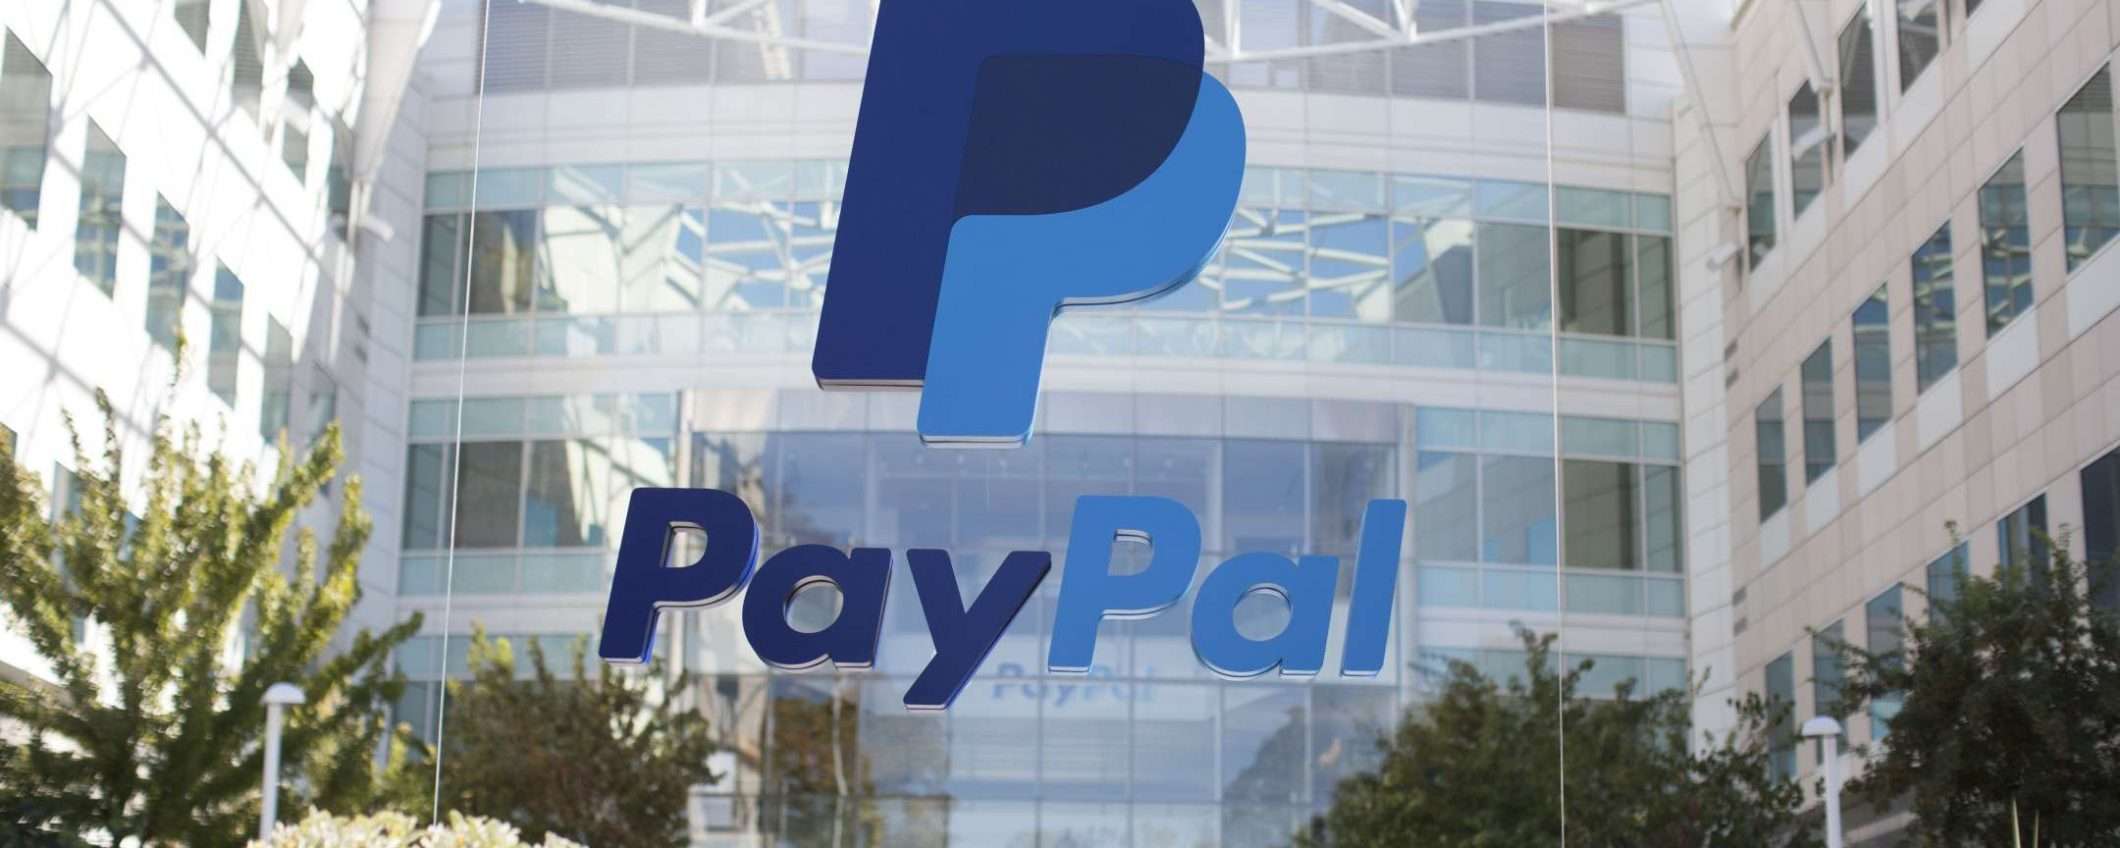 PayPal e PayTipper insieme per i pagamenti digitali